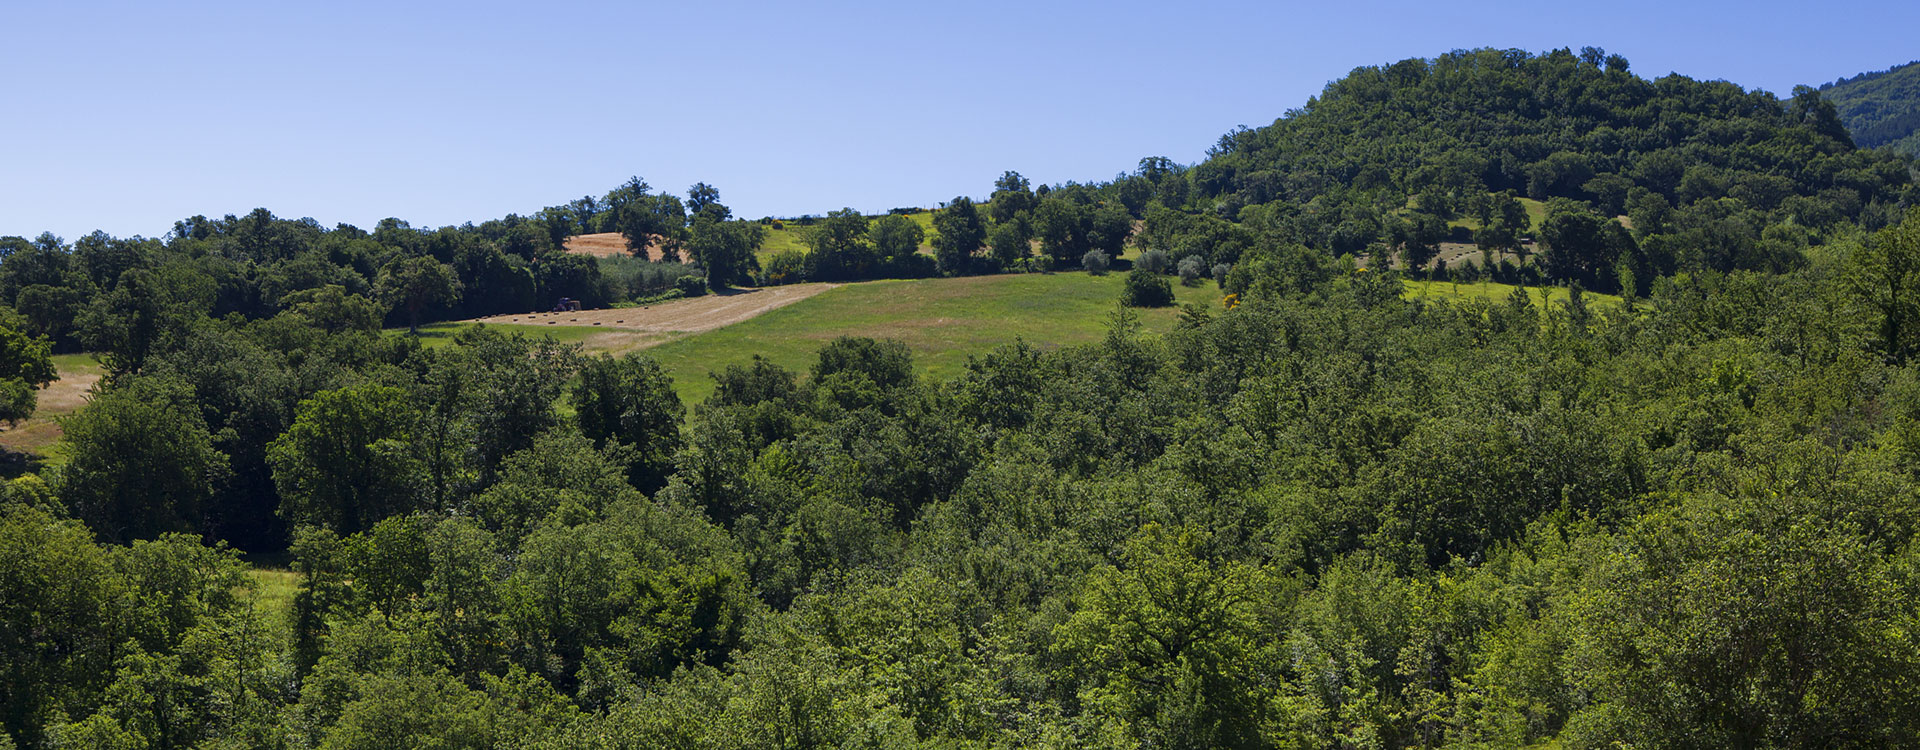 Agriturismo Assisi 'Relais Parco del Subasio' - Foto vetrina 05